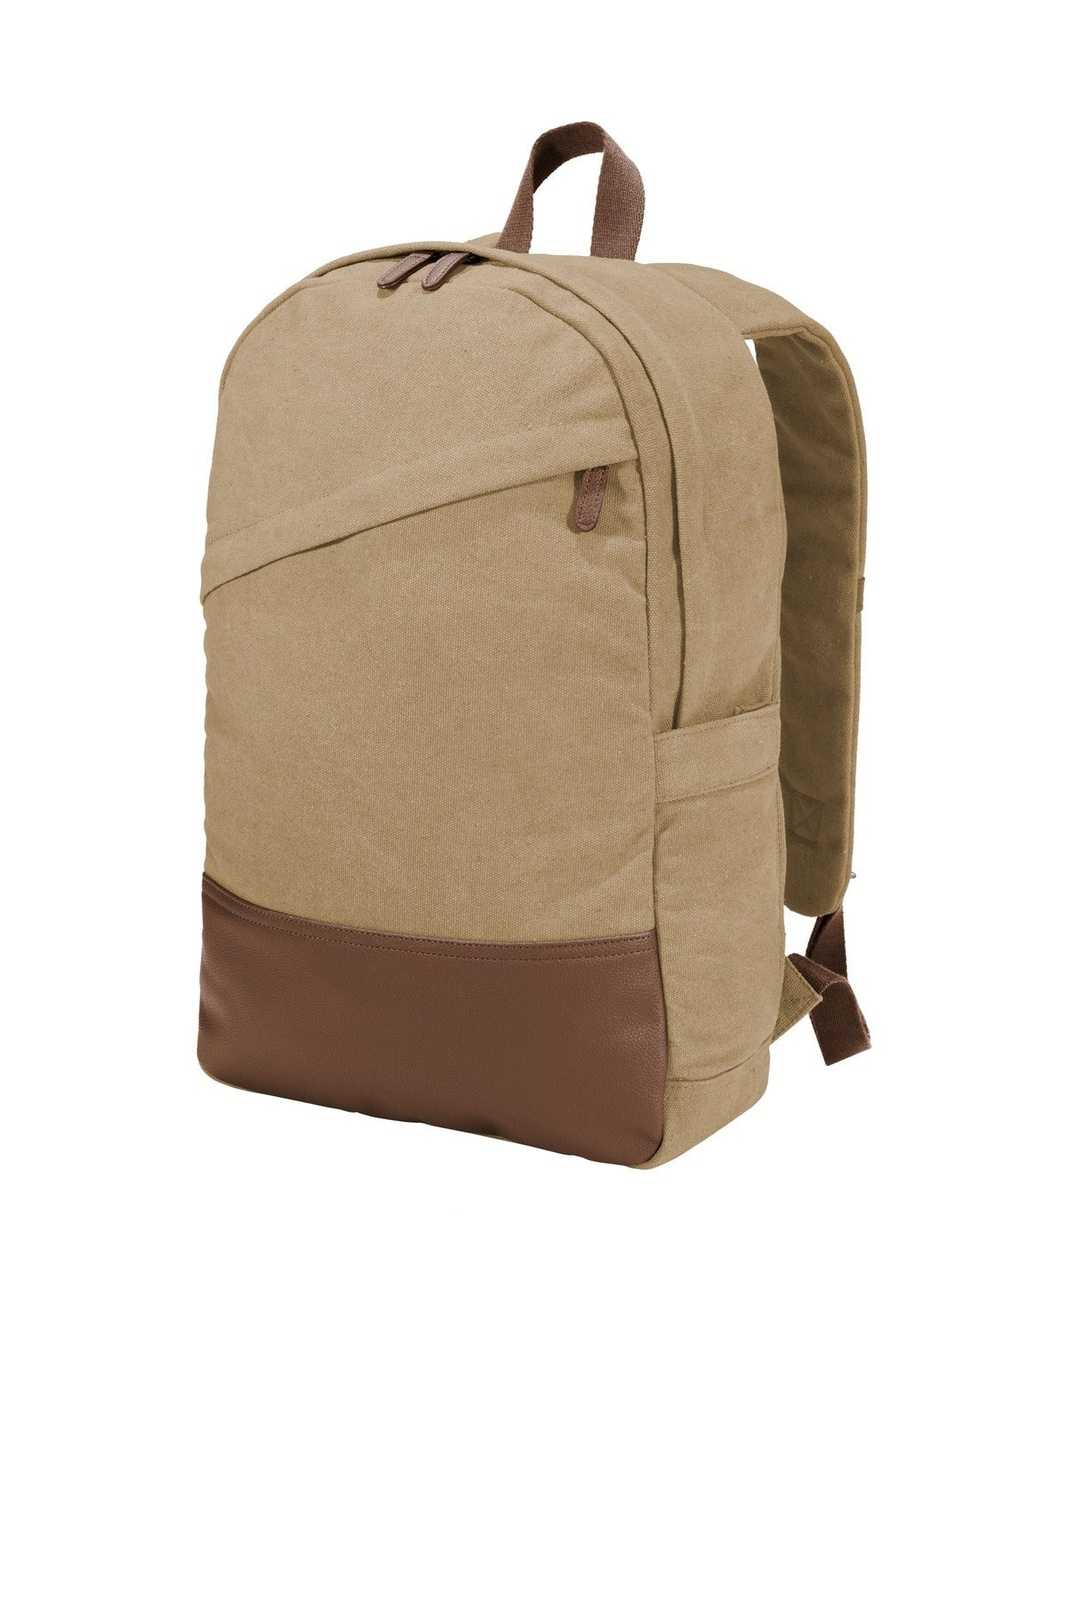 Port Authority BG210 Cotton Canvas Backpack - Desert Khaki - HIT a Double - 1